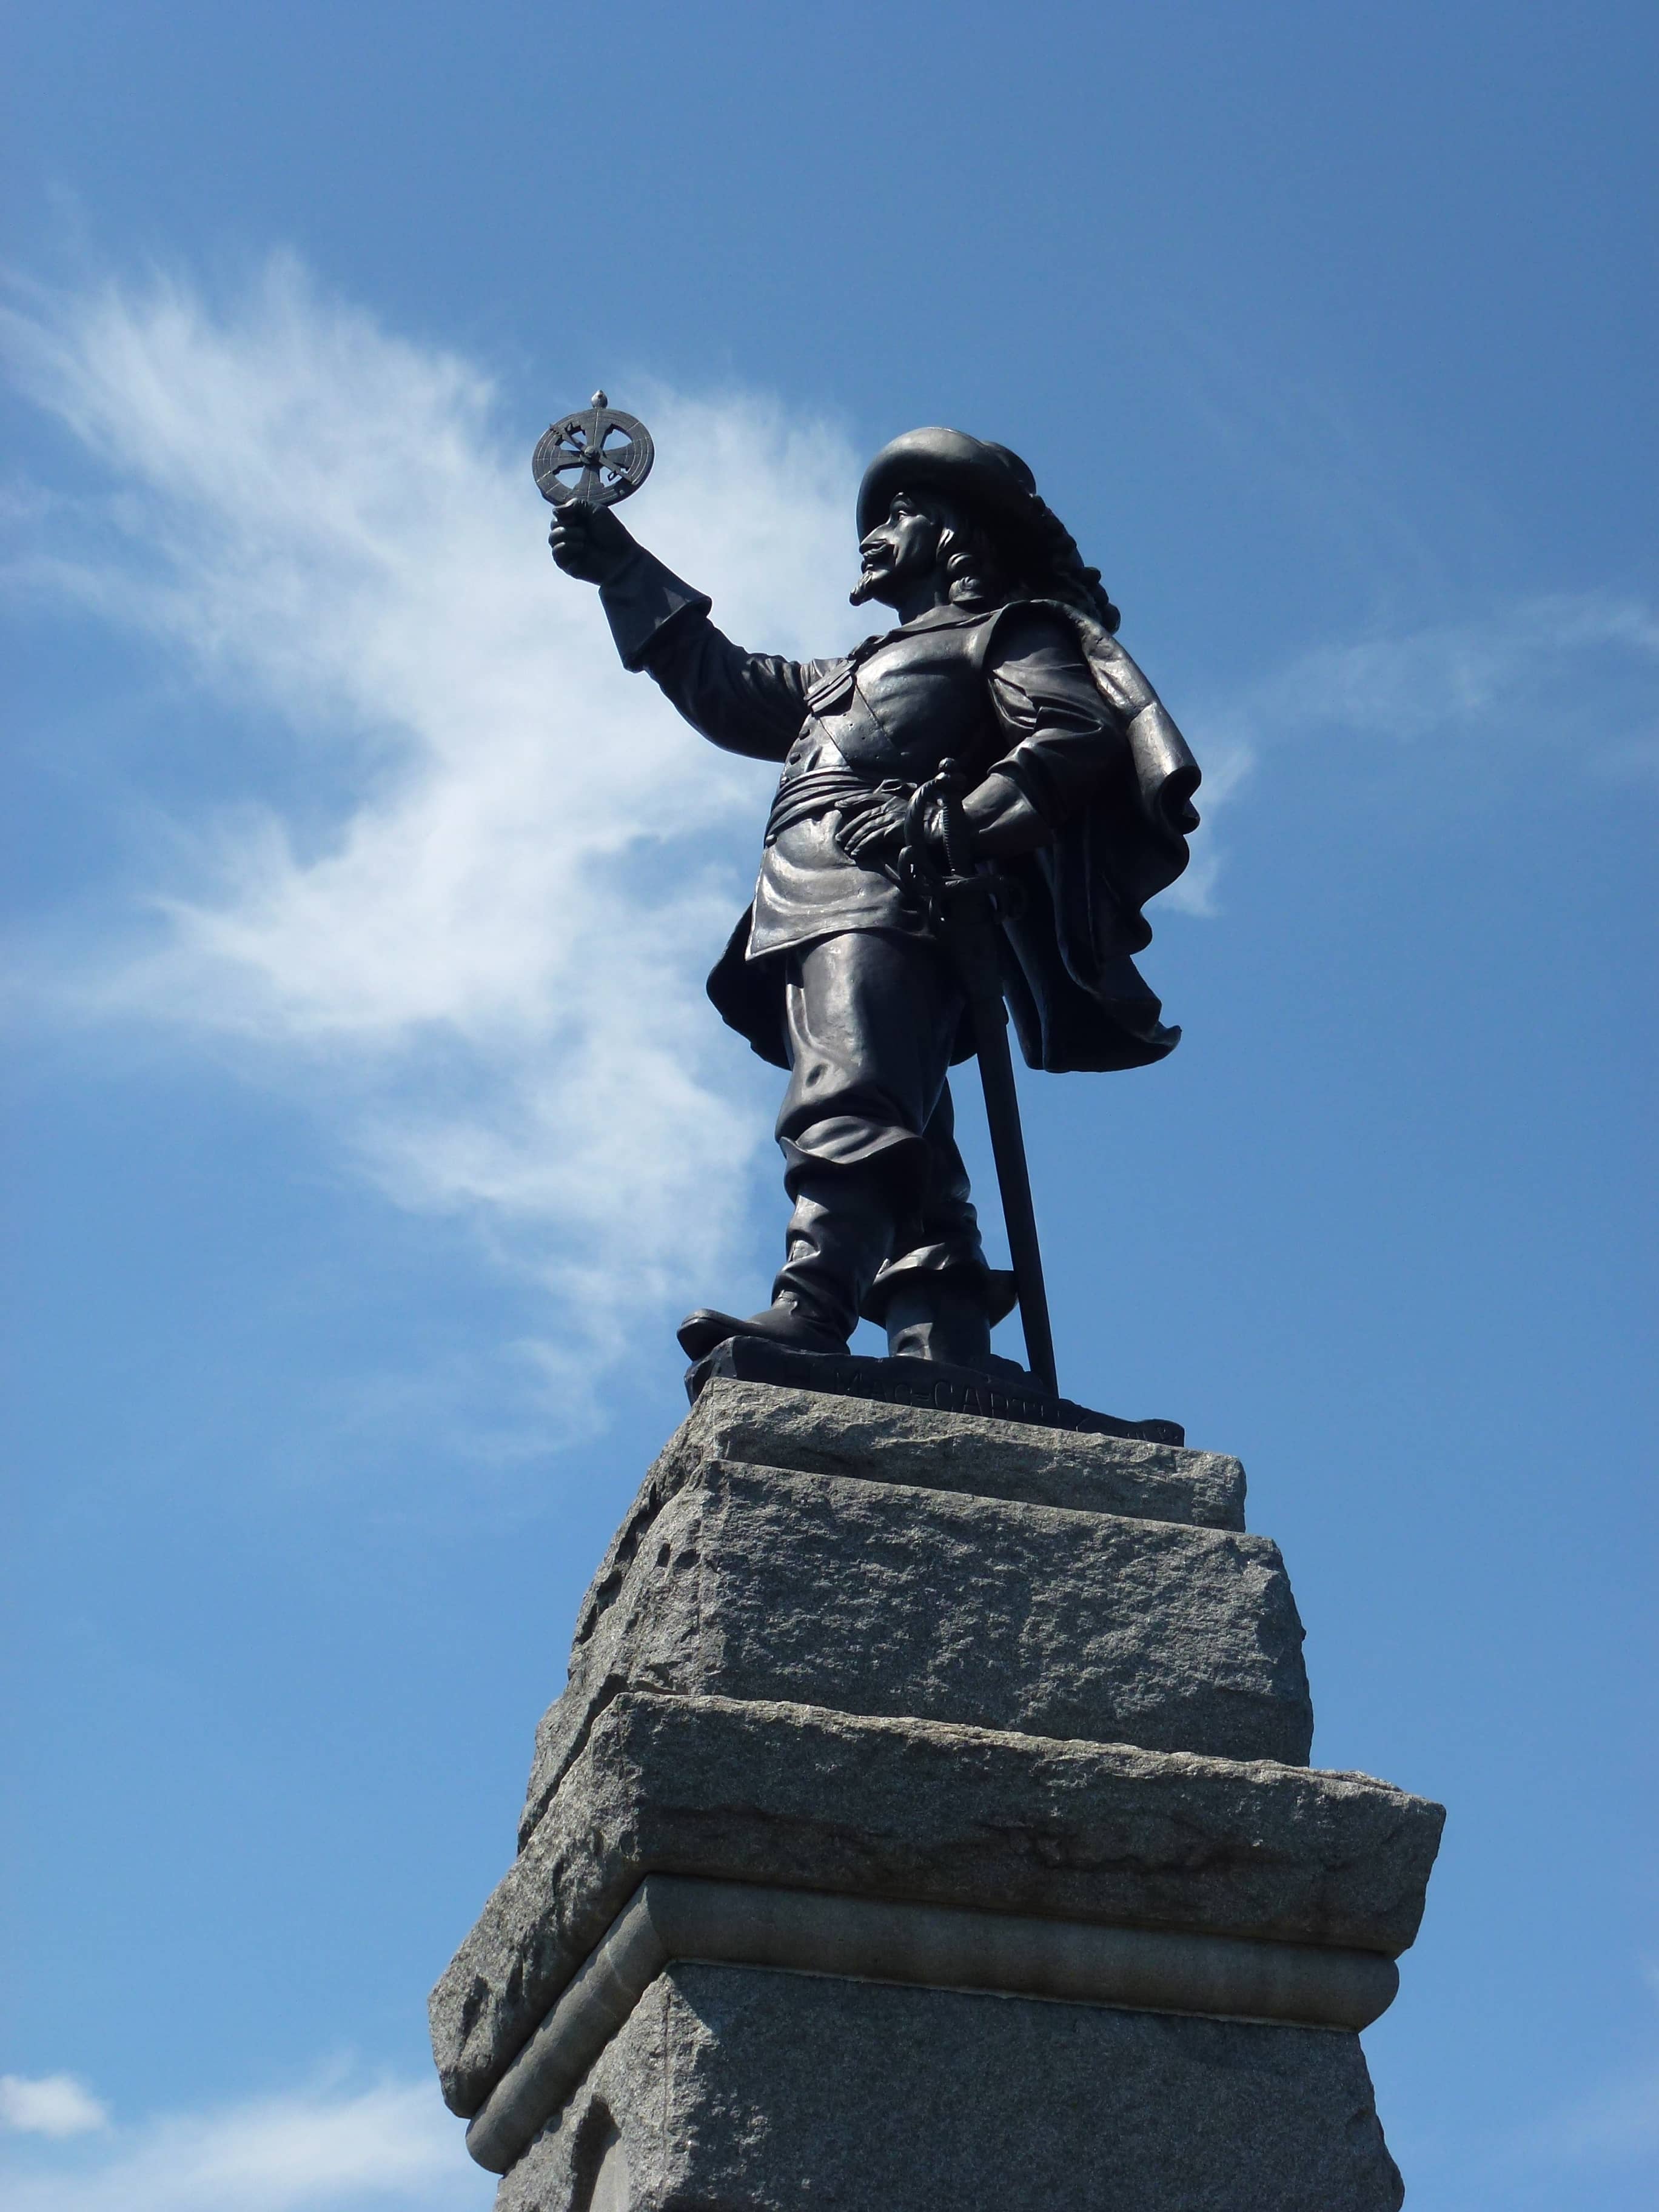 Samuel de Champlain statue at Nepean Point in Ottawa, Ontario, Canada